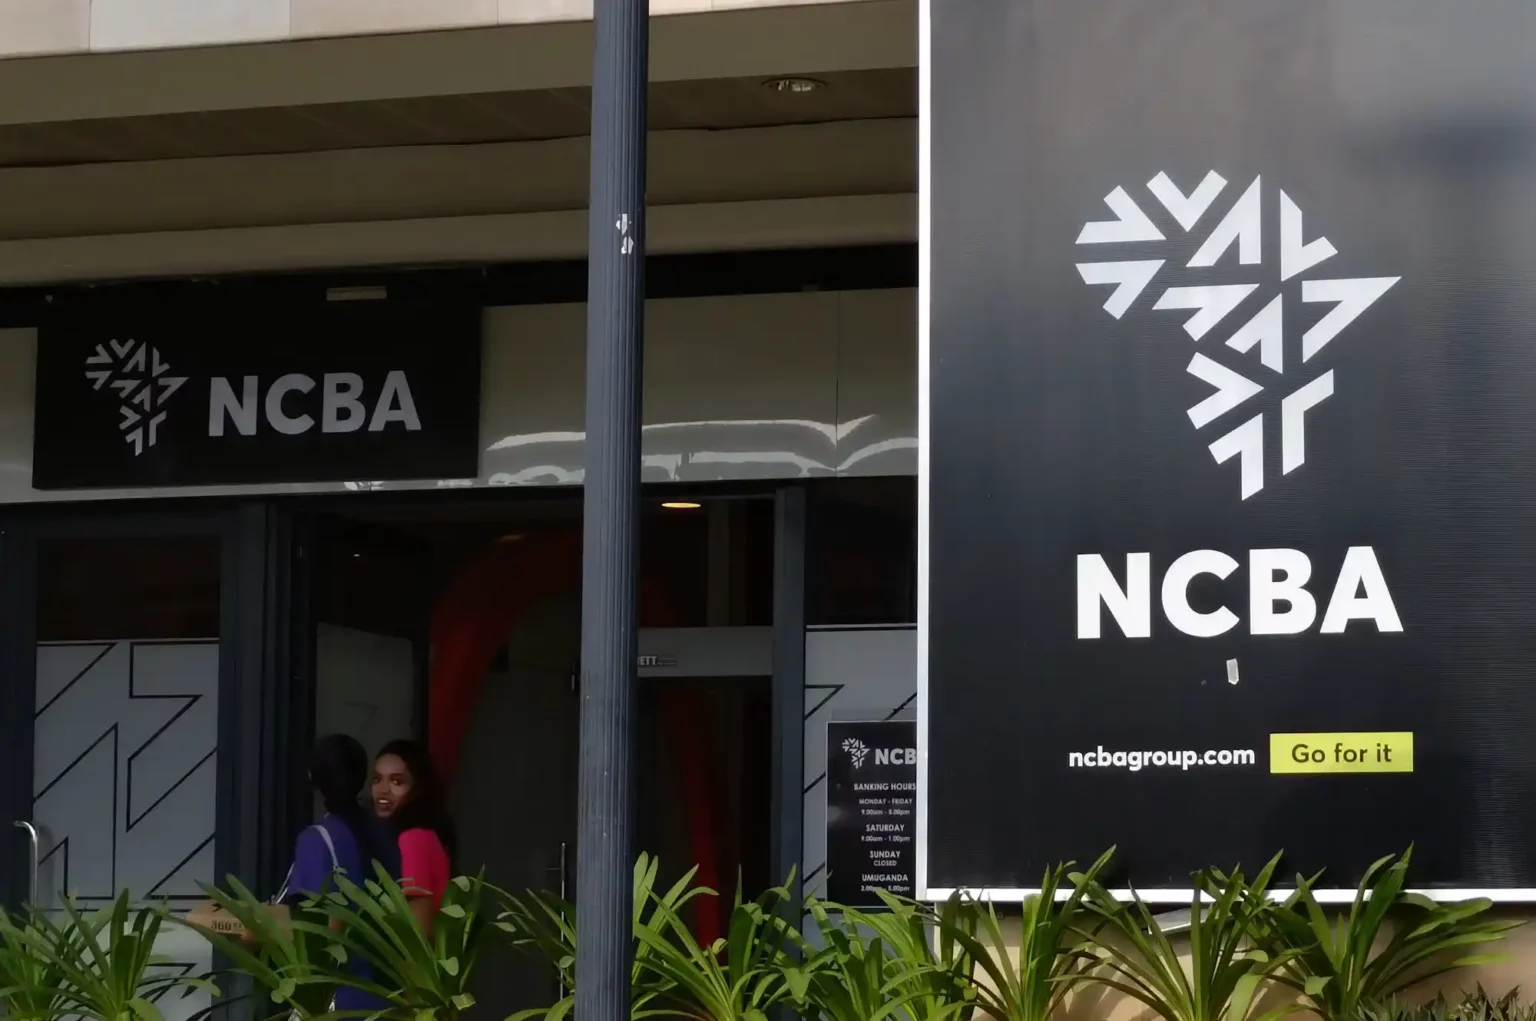 NCBA Group branch in Kigali Rwanda. NCBA Group operates a network of more than 100 branches in five countries including Kenya, Uganda, Tanzania, Rwanda and Ivory Coast.